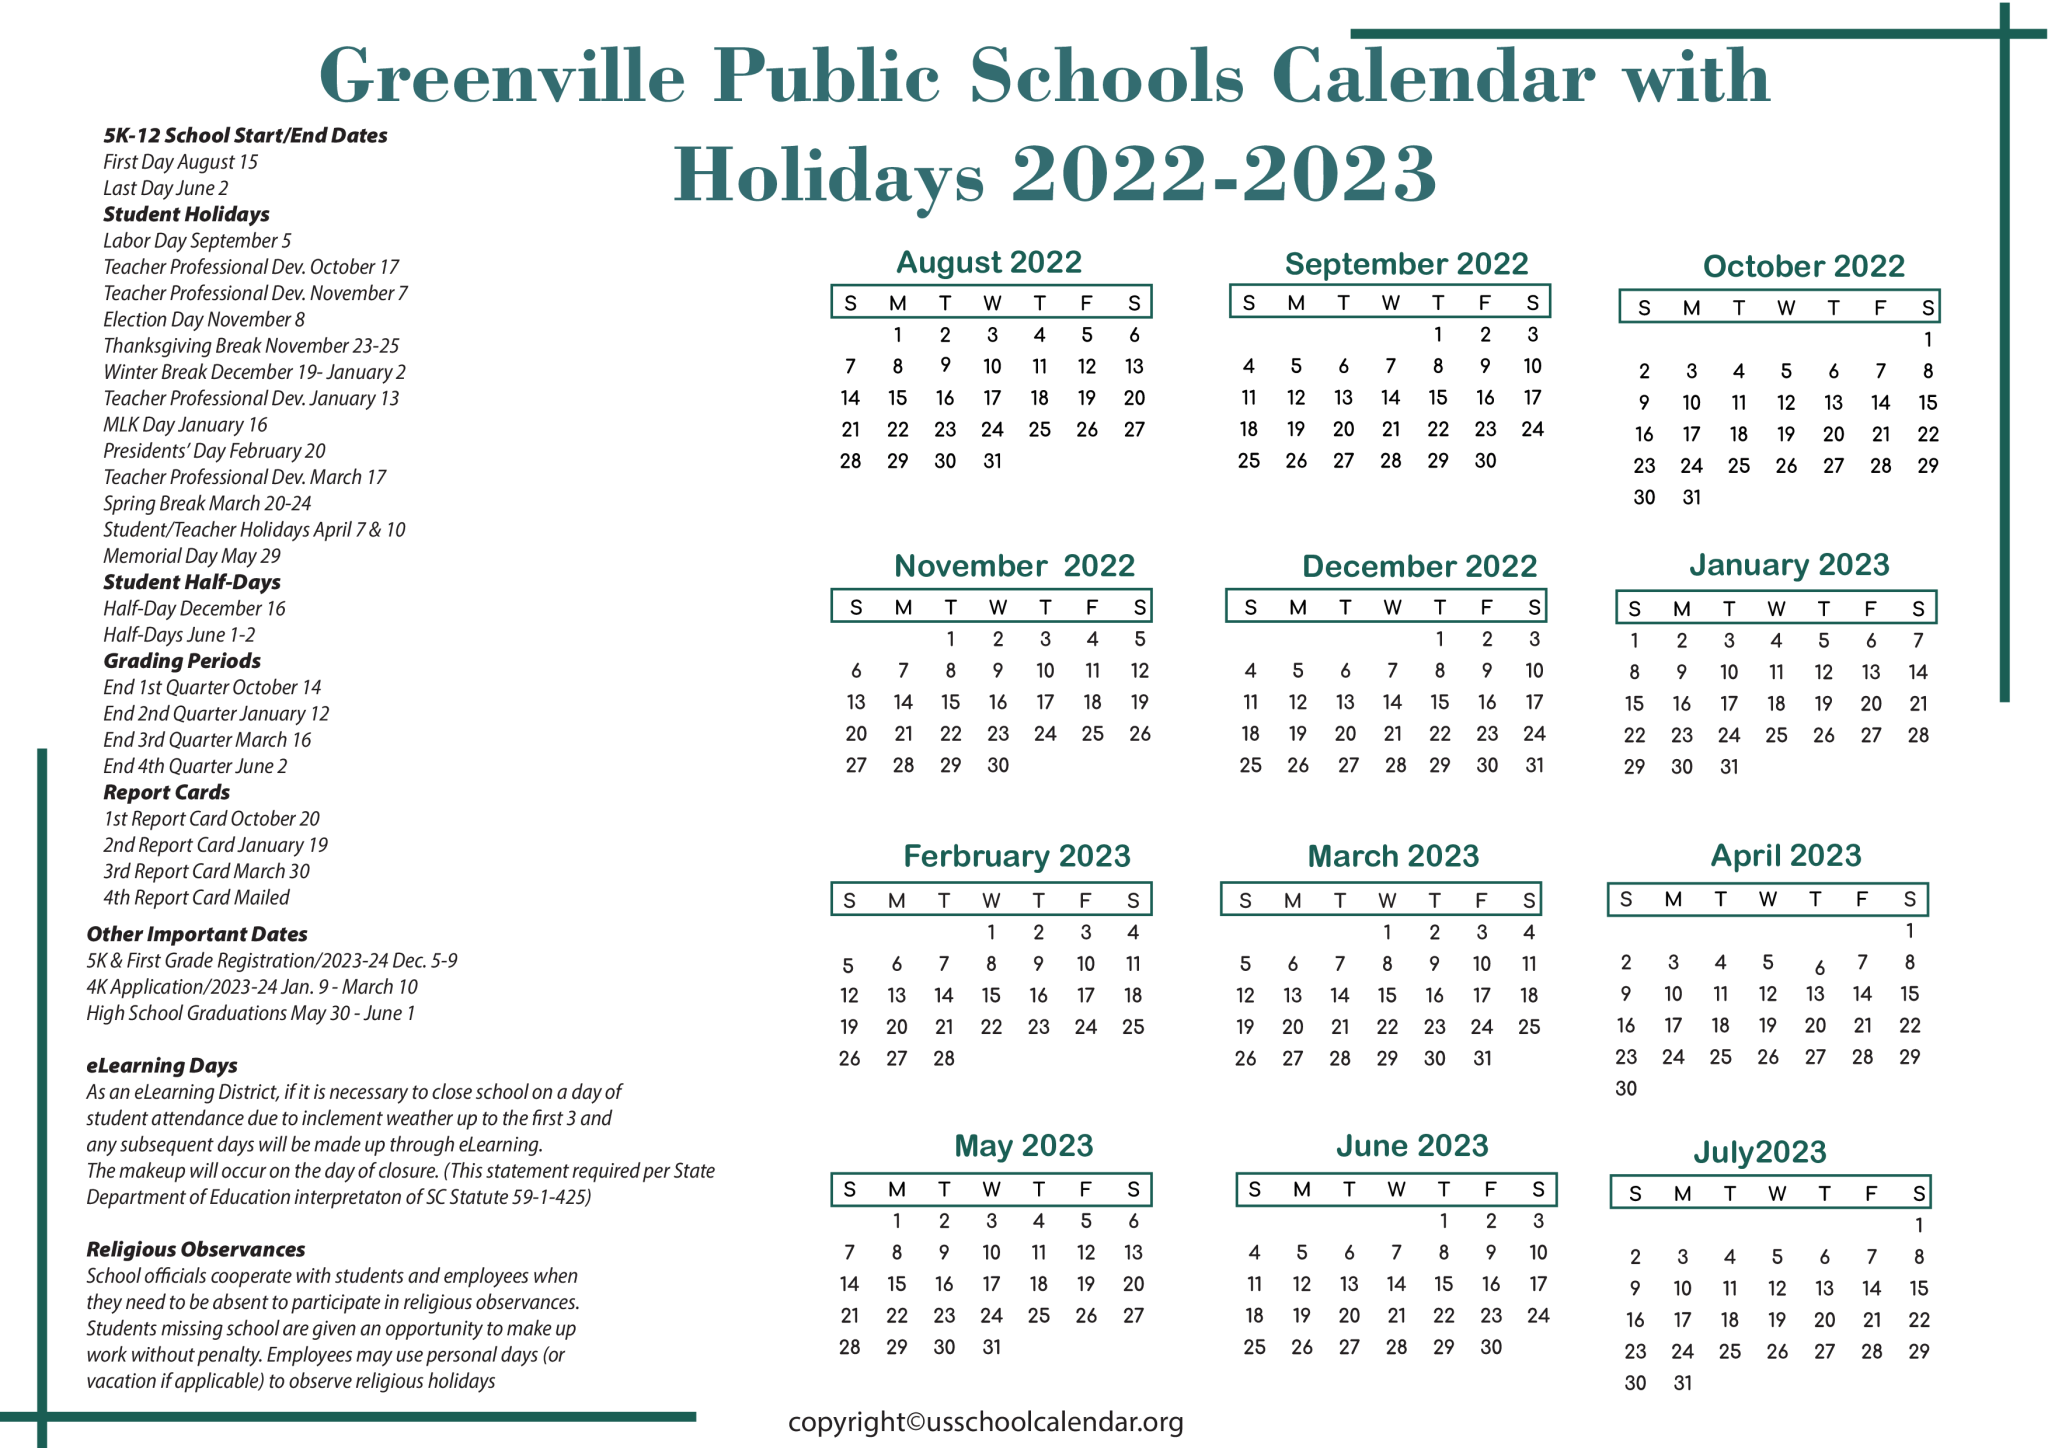 gps-greenville-public-schools-calendar-with-holidays-2023